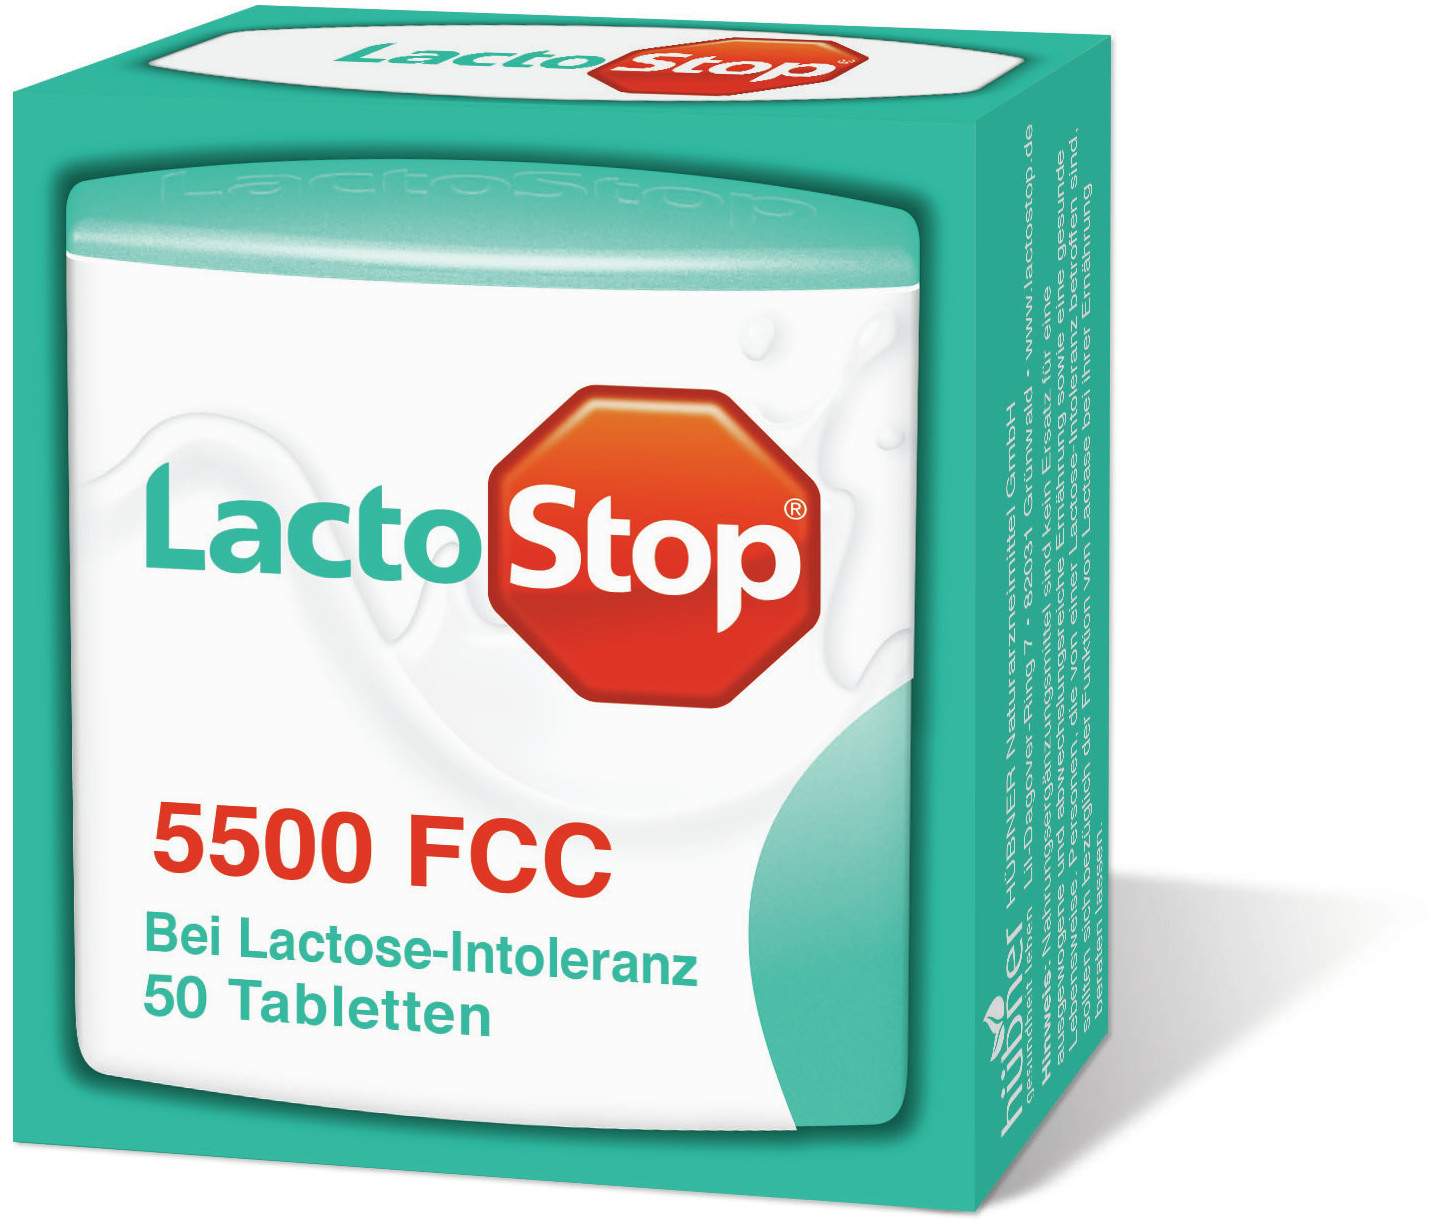 Lactostop 5.500 Fcc 50 Tabletten Klickspender kaufen Volksversand